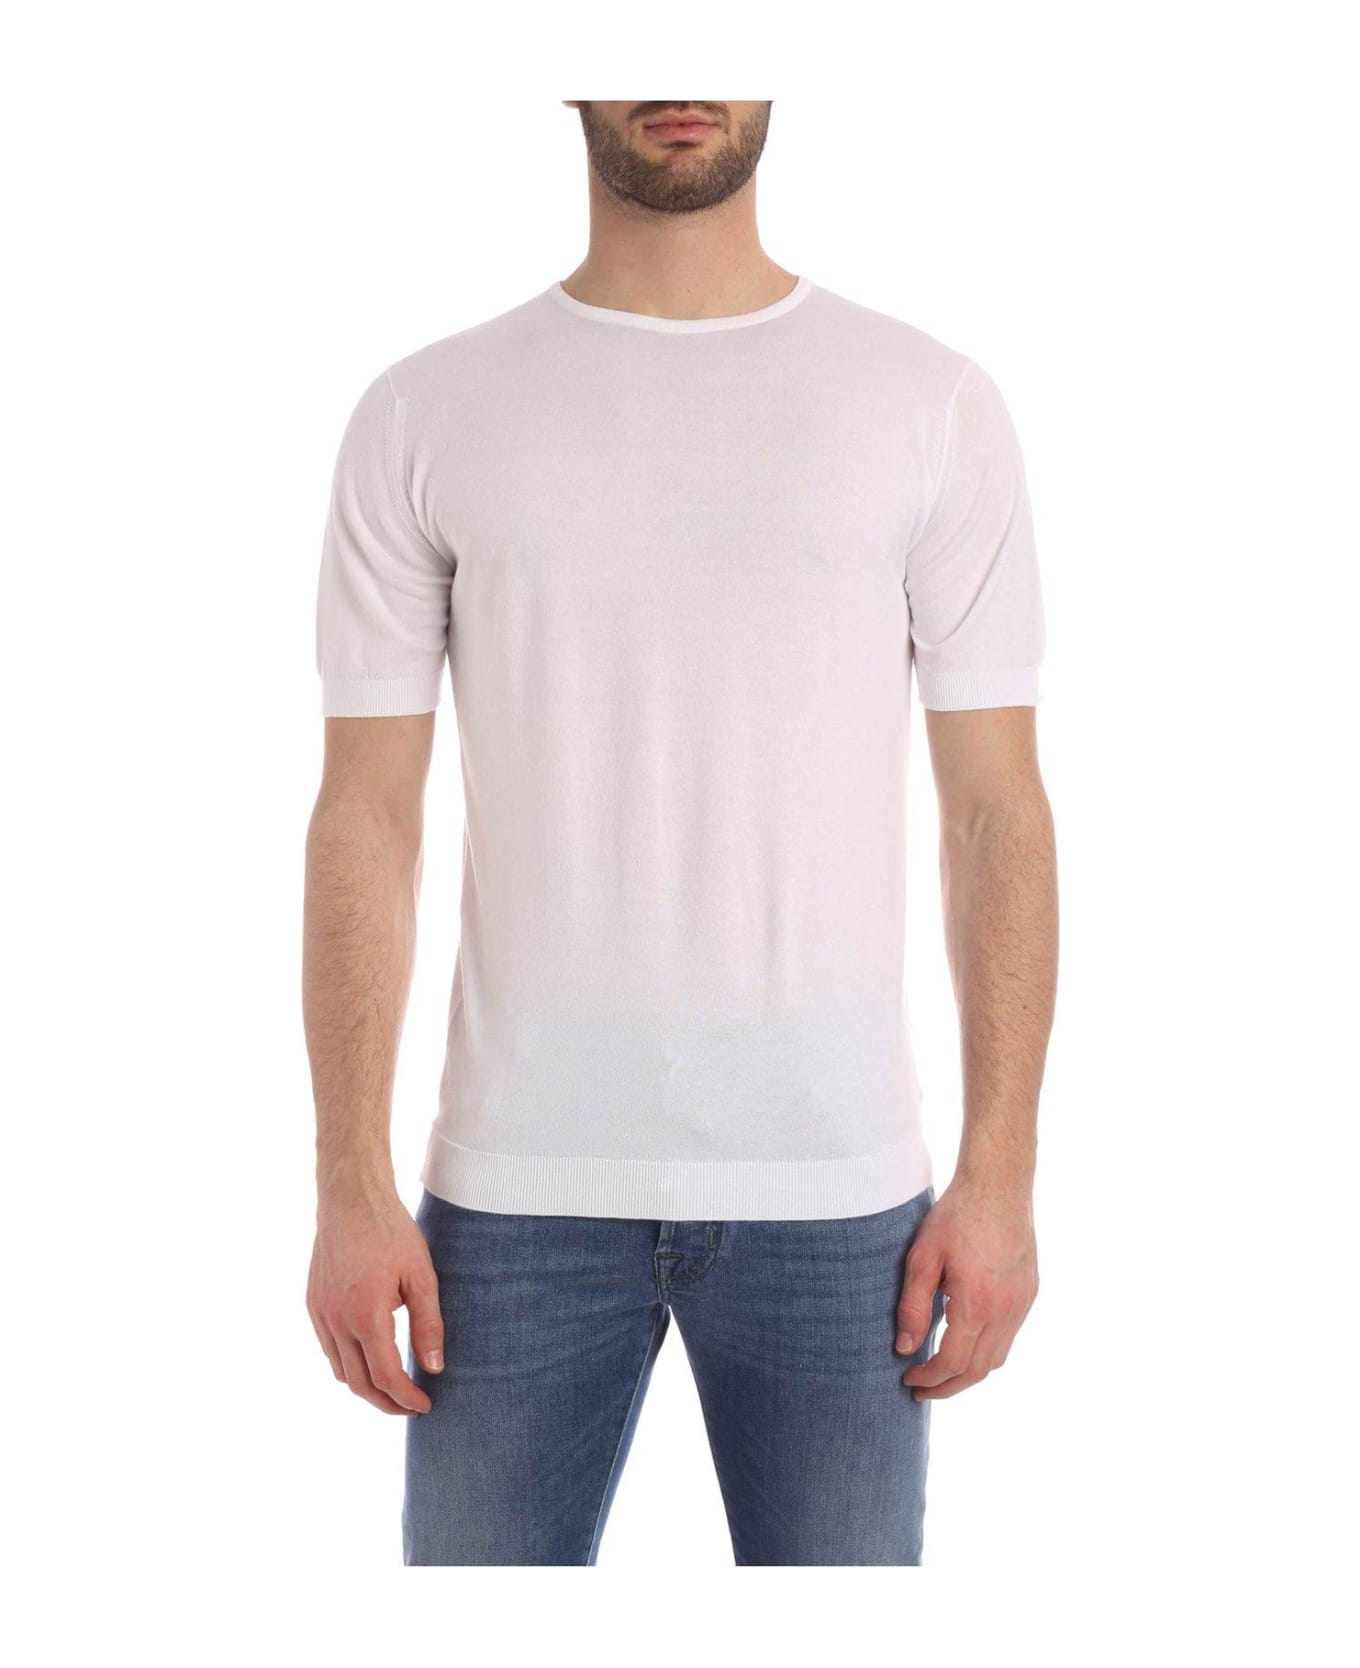 John Smedley Belden Classic T-shirt - WHITE